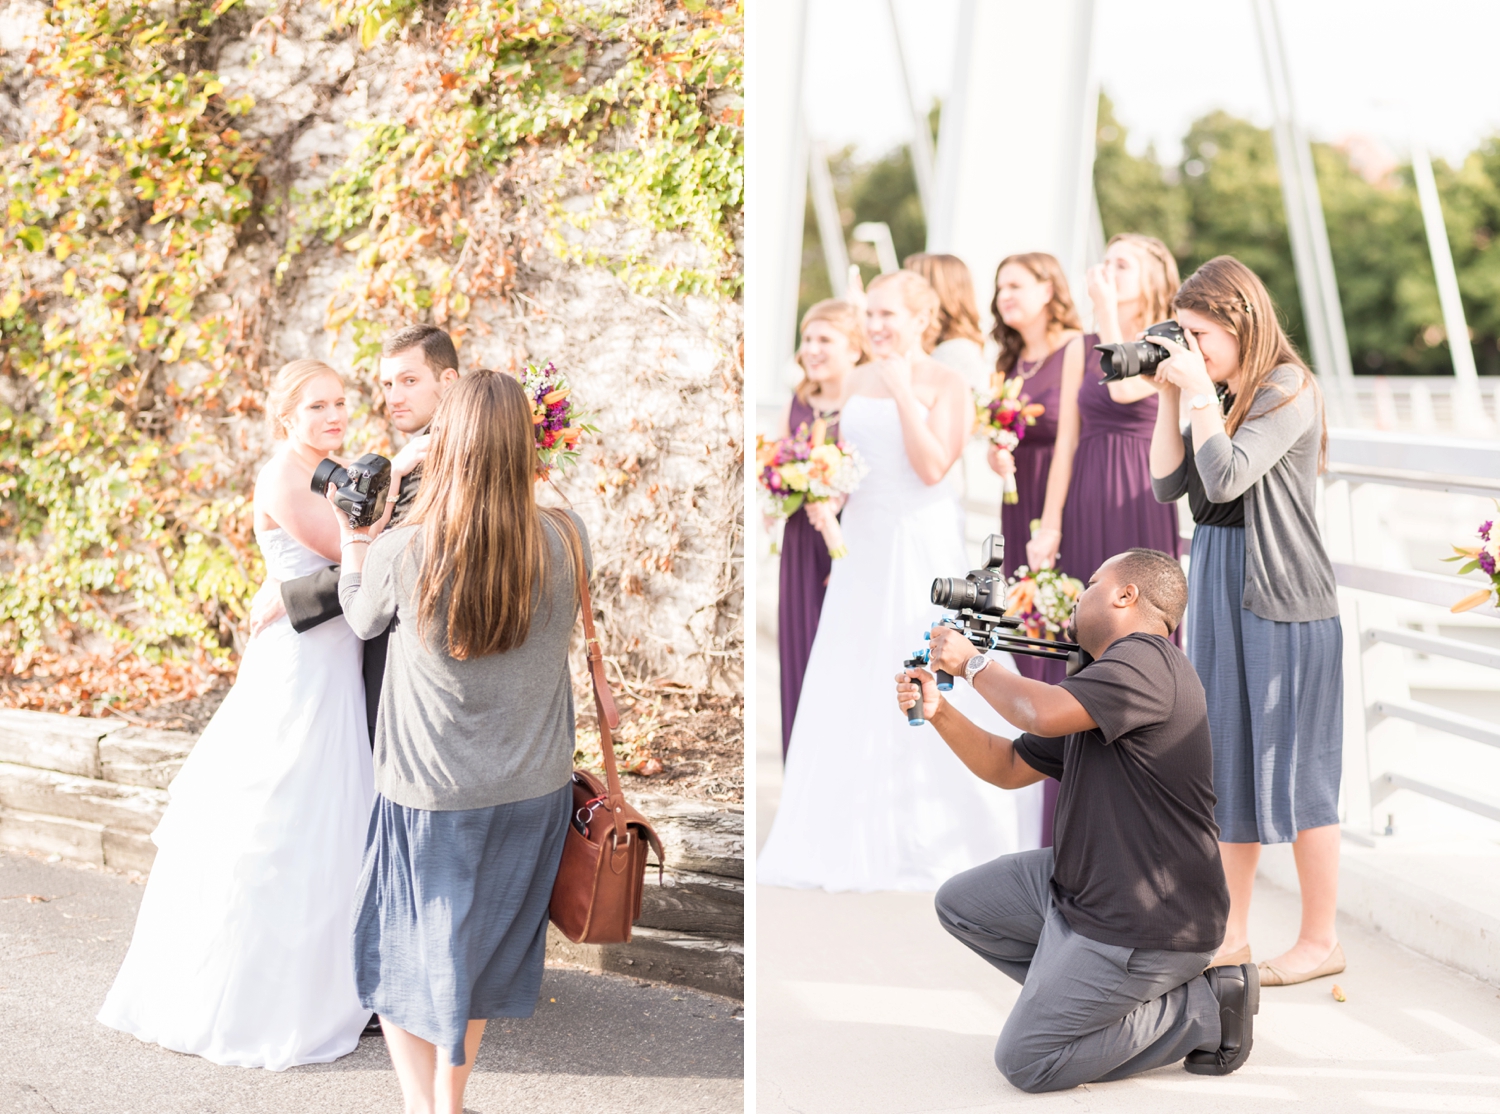 behind-the-scenes-of-a-wedding-photographer-stephanie-brann-photography_0114